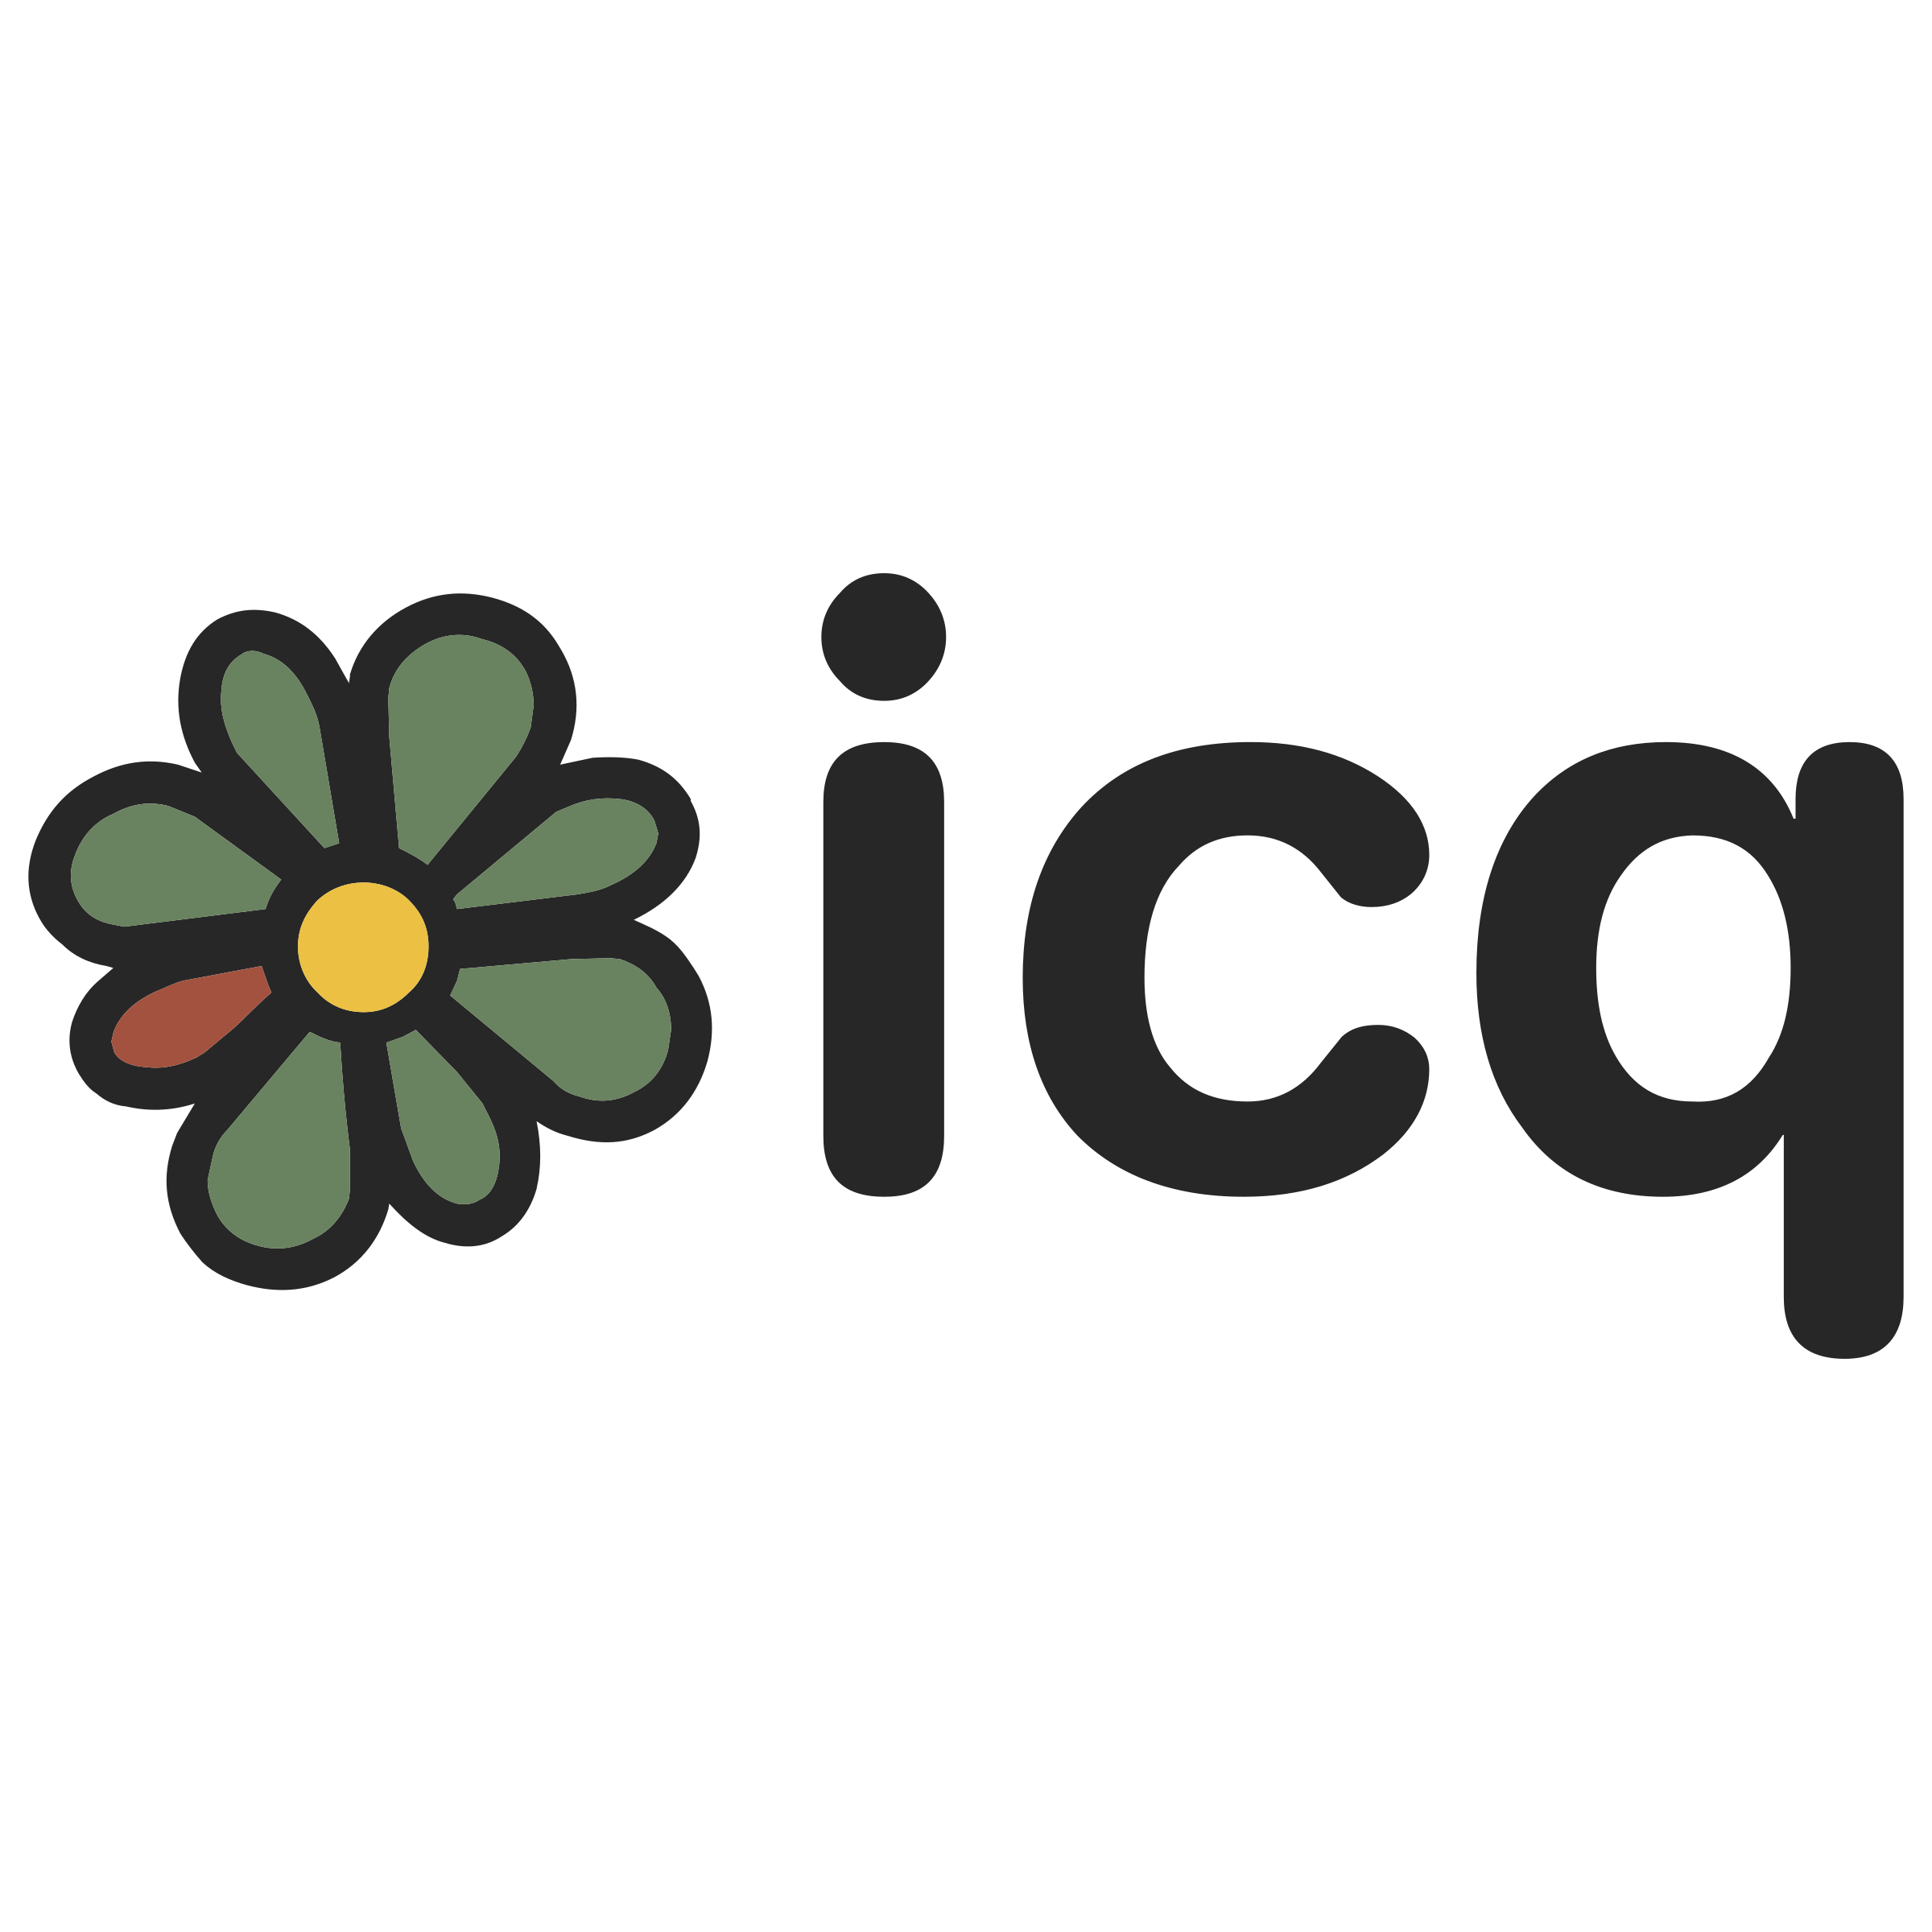 ICQ Logo - ICQ Logo PNG Transparent & SVG Vector - Freebie Supply